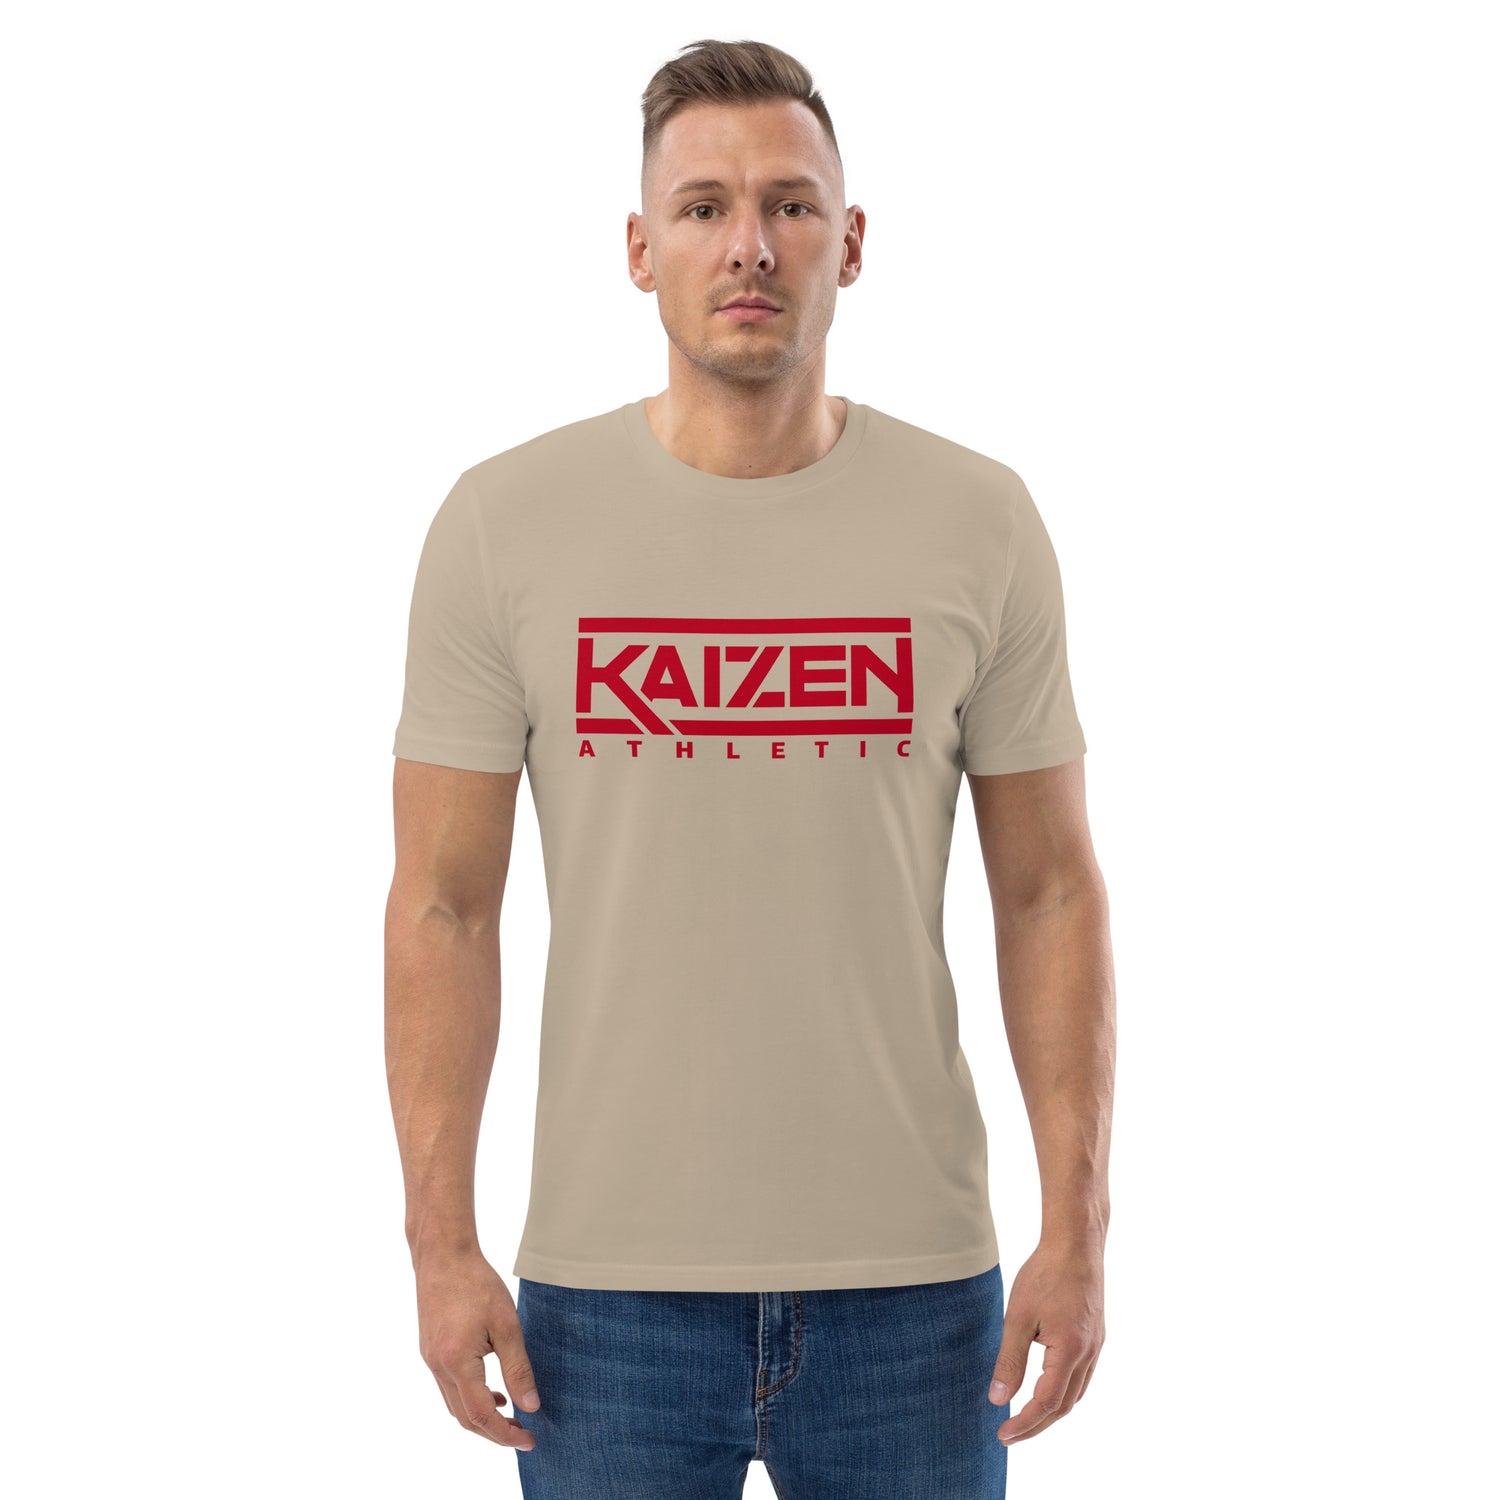 Unisex Organic Cotton T-Shirt by Kaizen Athletic